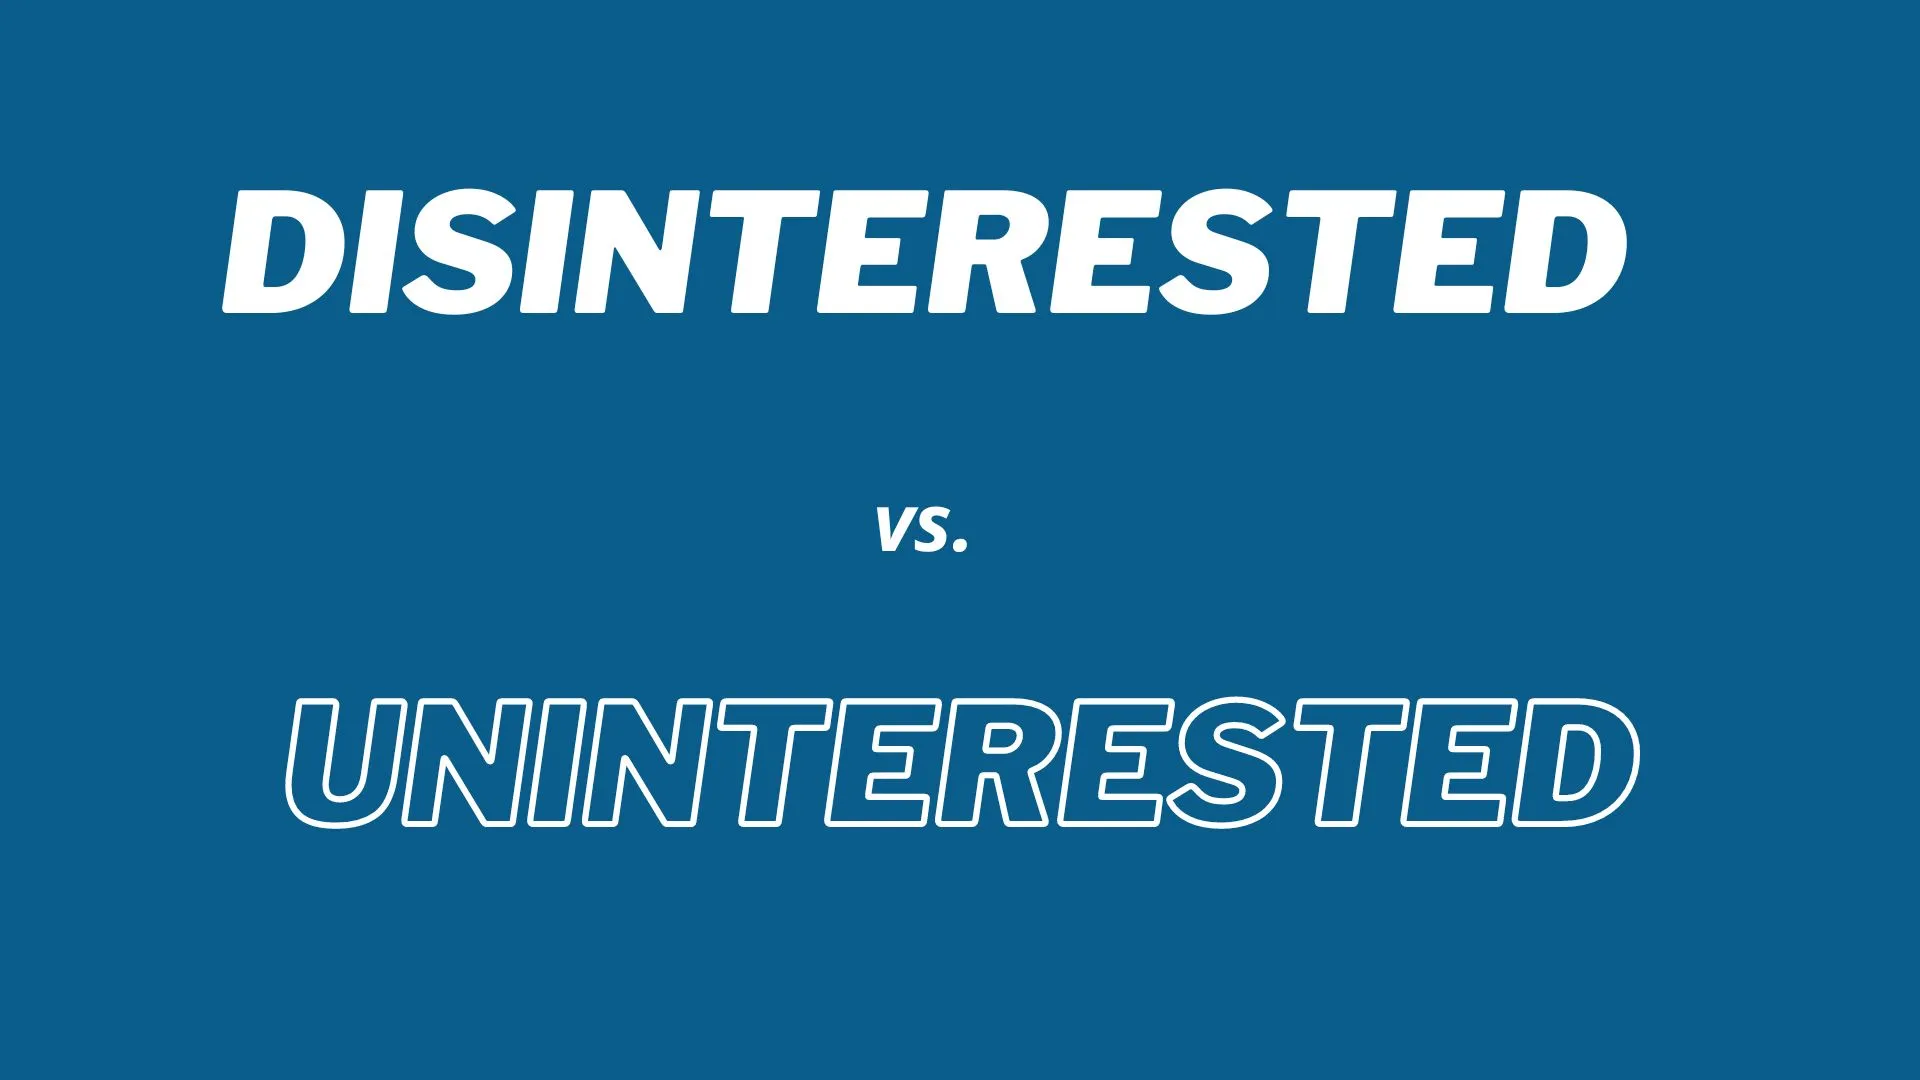 "Disinterested" vs. "Uninterested" - これら二つの単語の定義と例。